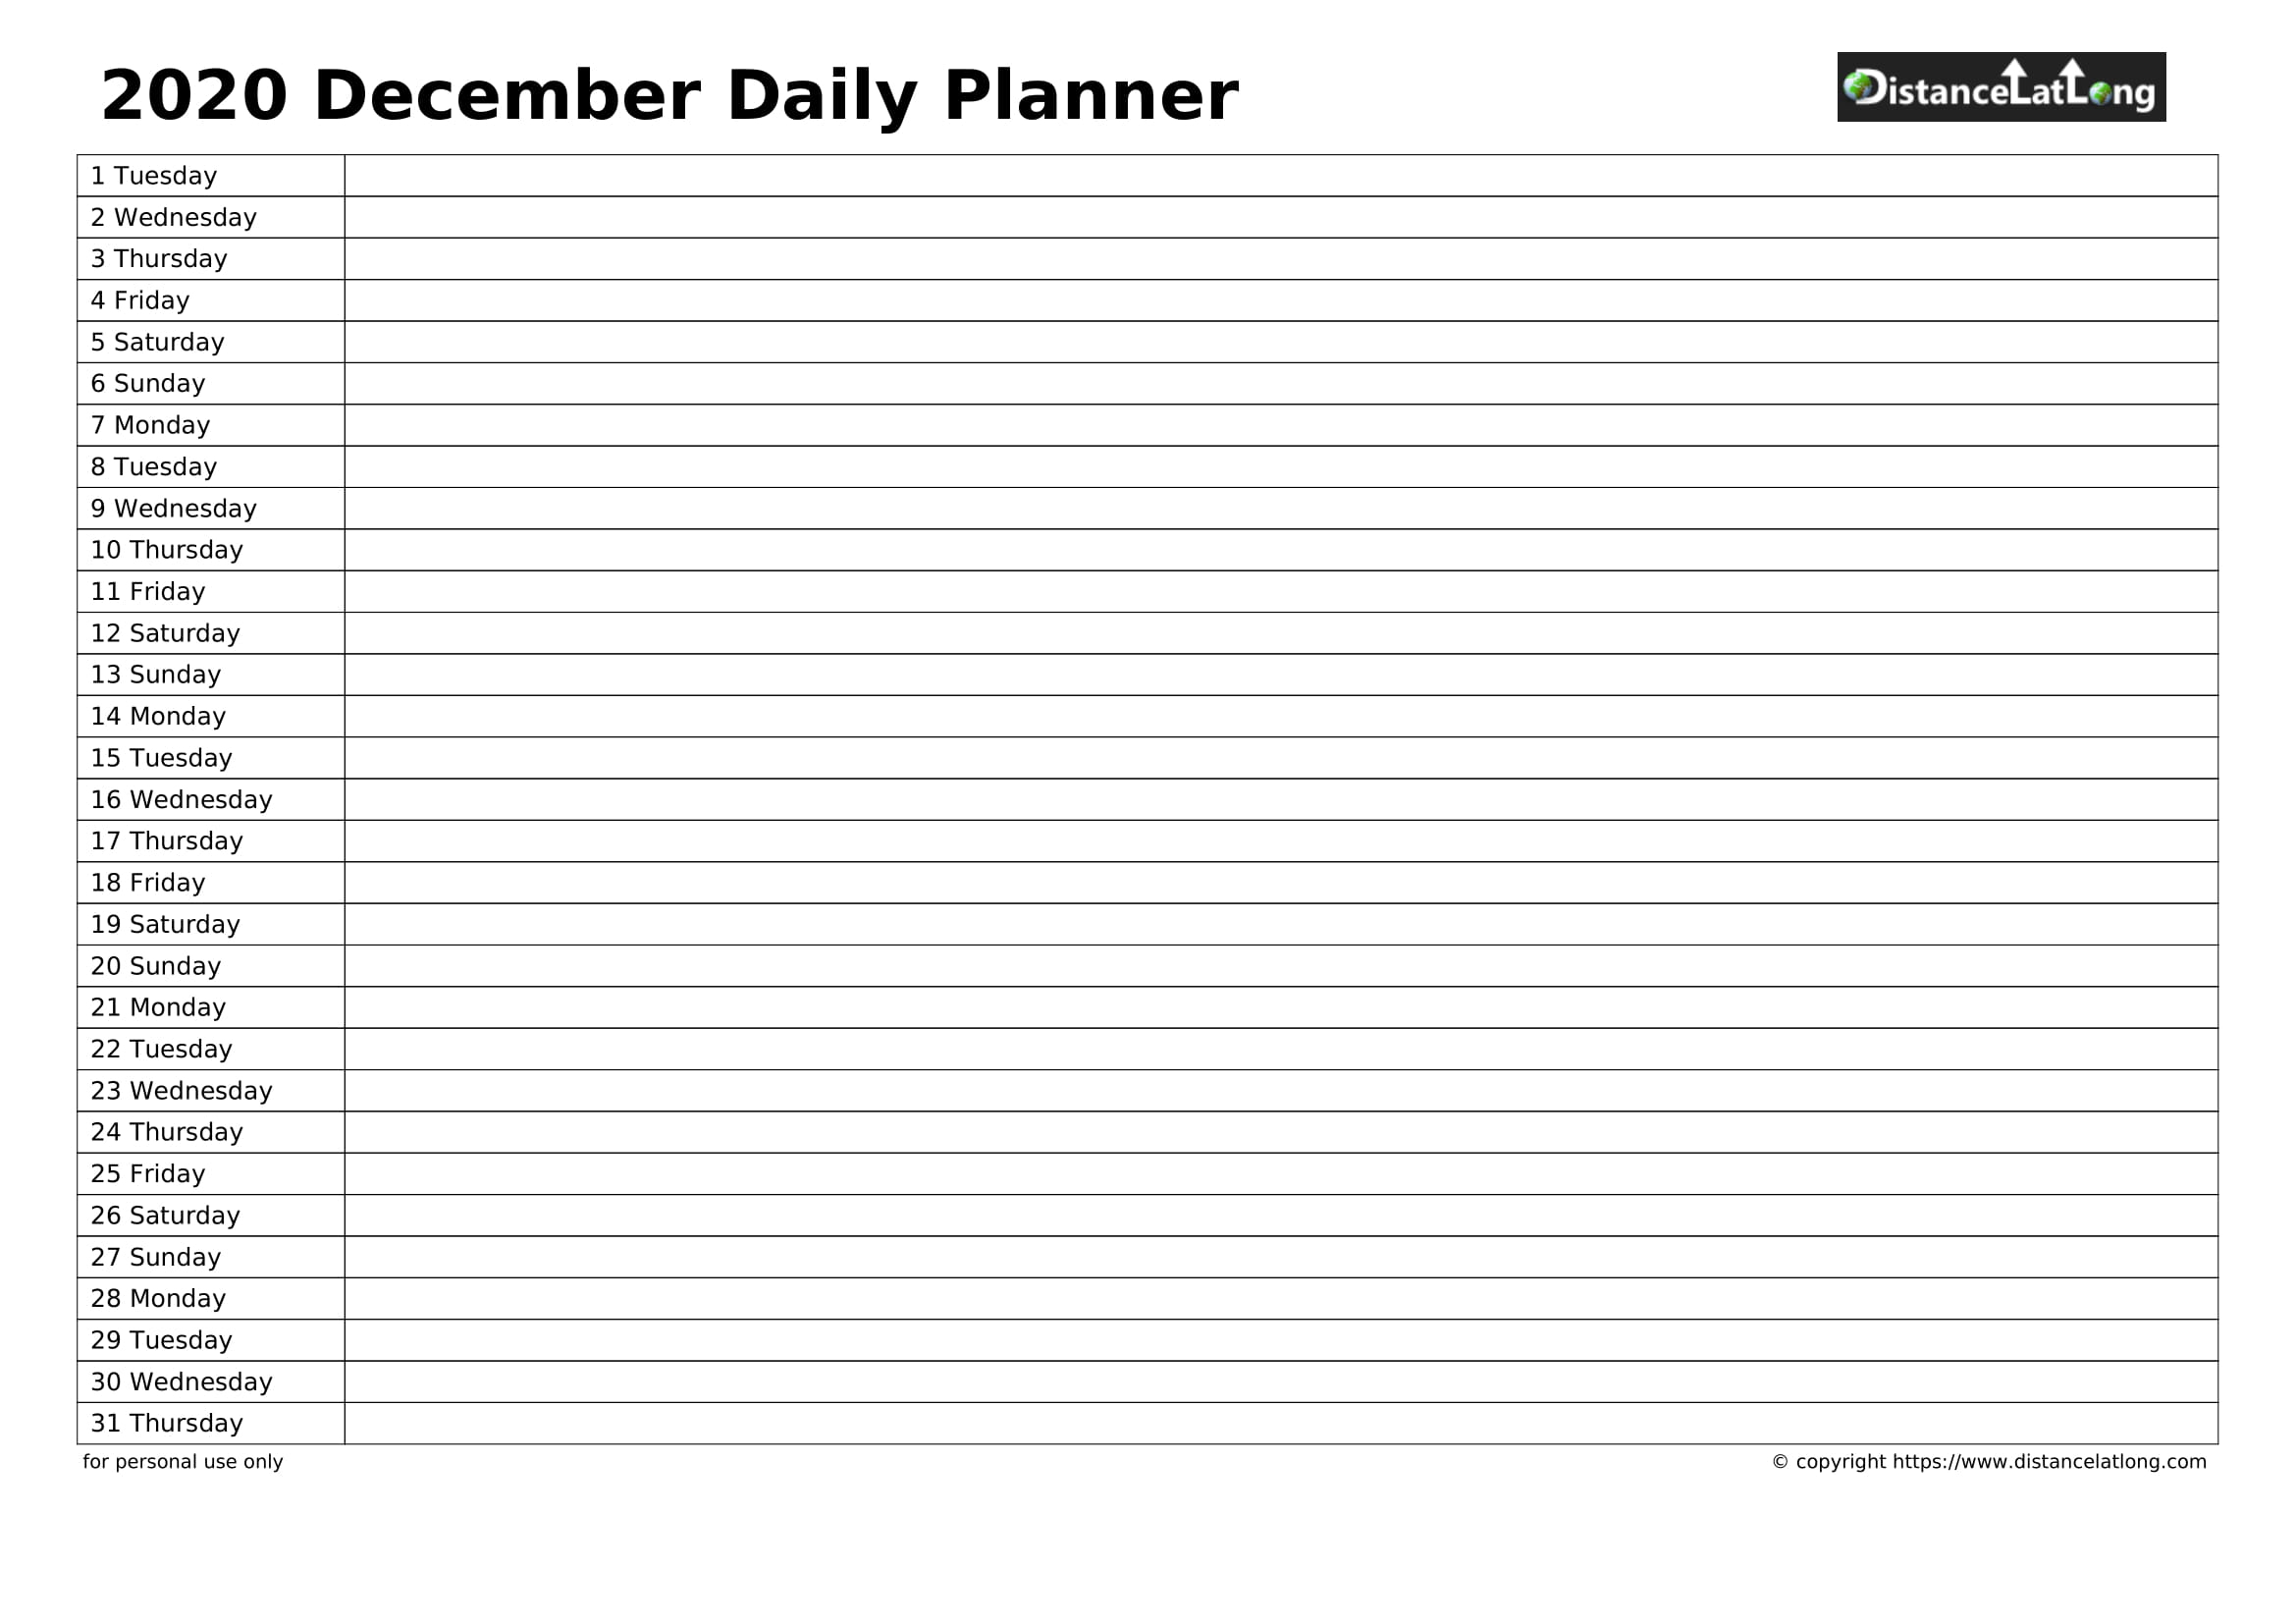 December 2020 Calendars For Pdf, Words And Jpg Formats